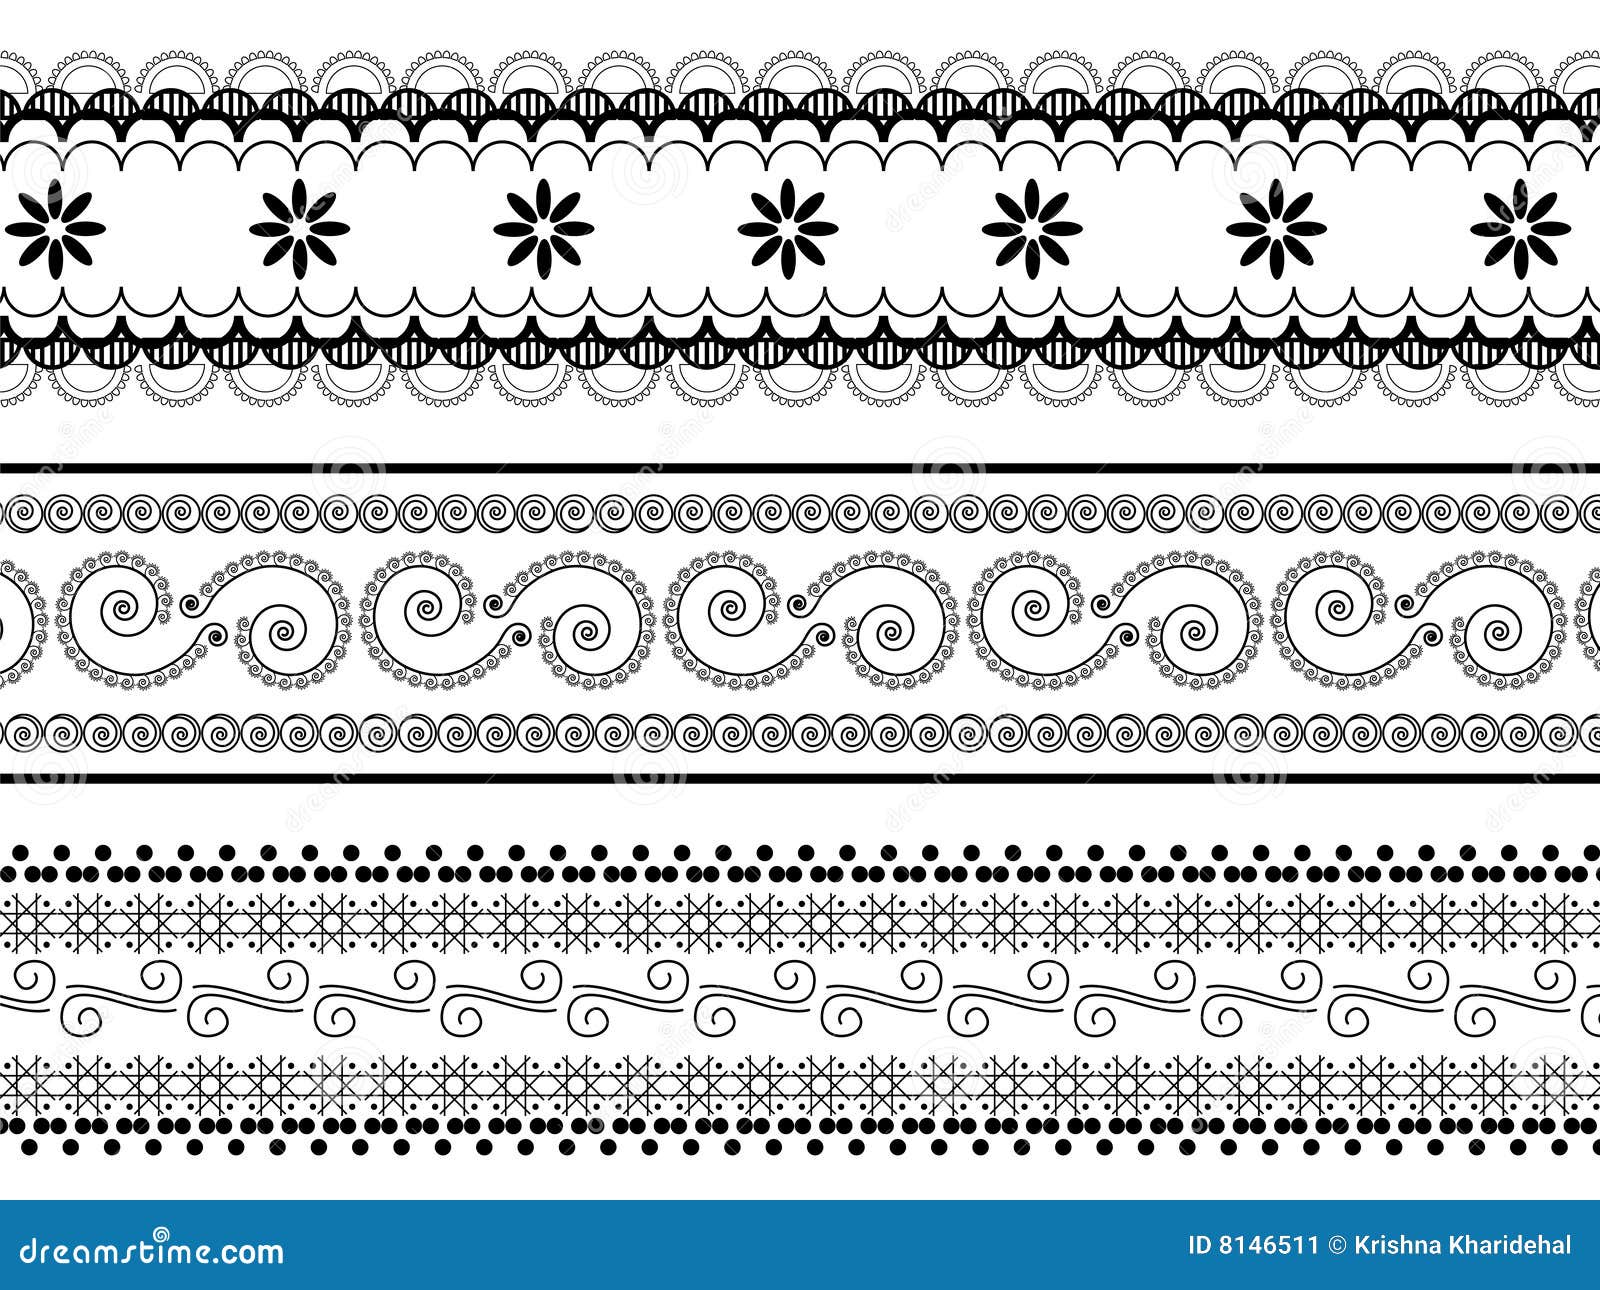  Henna  borders stock illustration Illustration of motif  